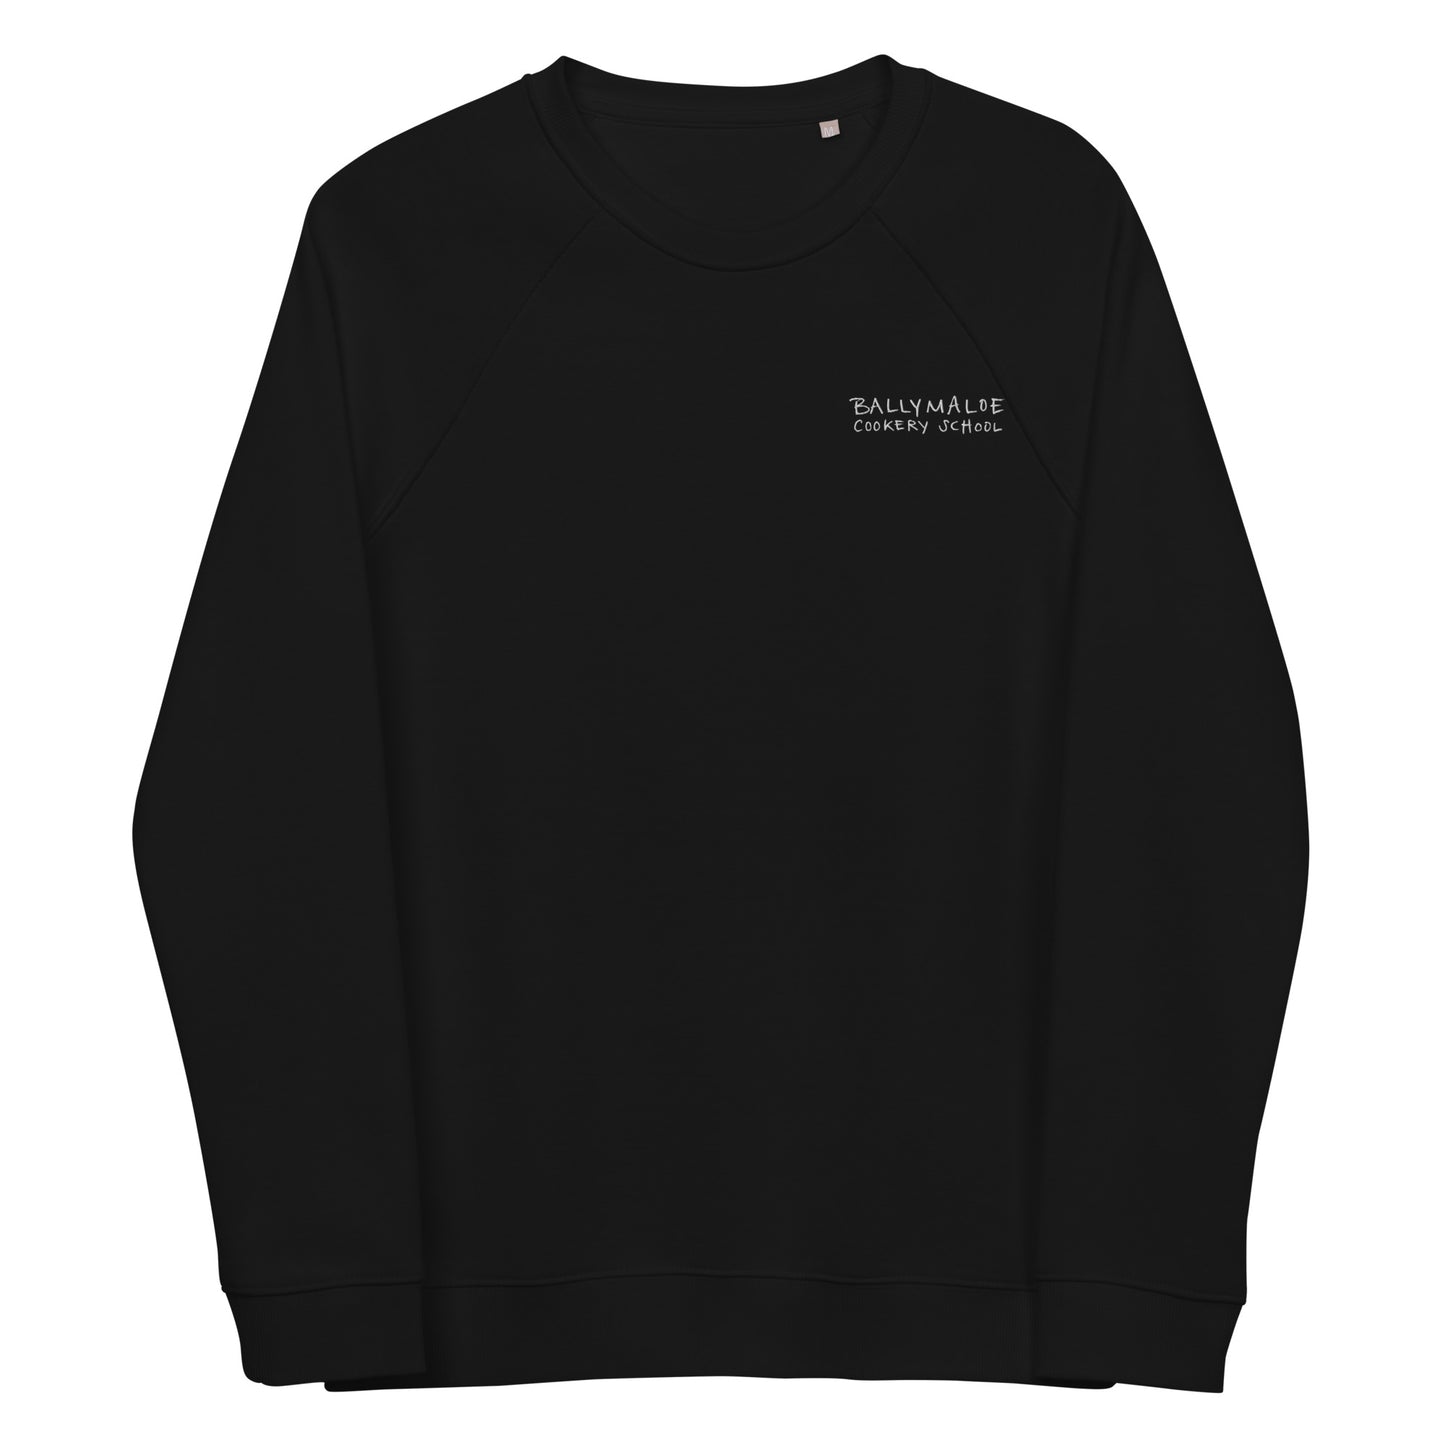 Unisex Organic Cotton Sweatshirt | September 2023